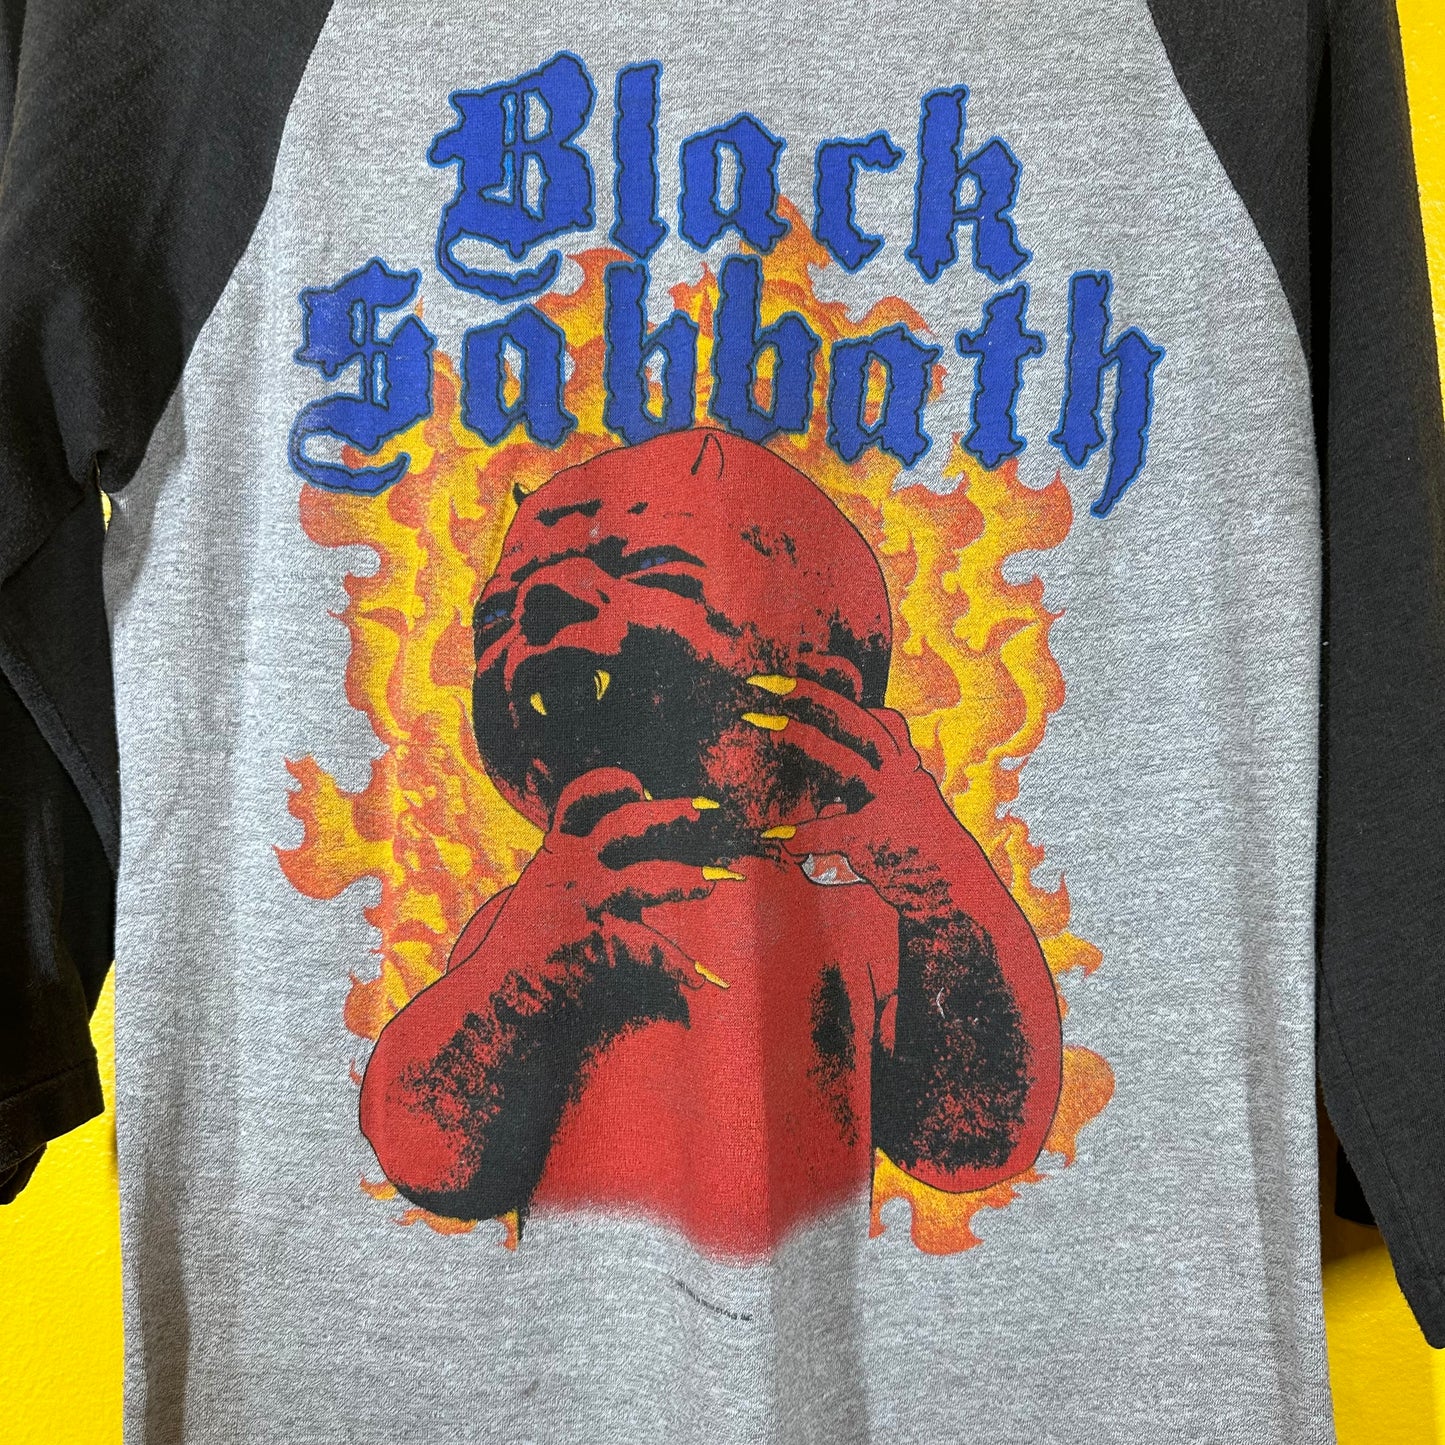 VTG Black Sabbath Born Again Raglan Single Stitch sz M